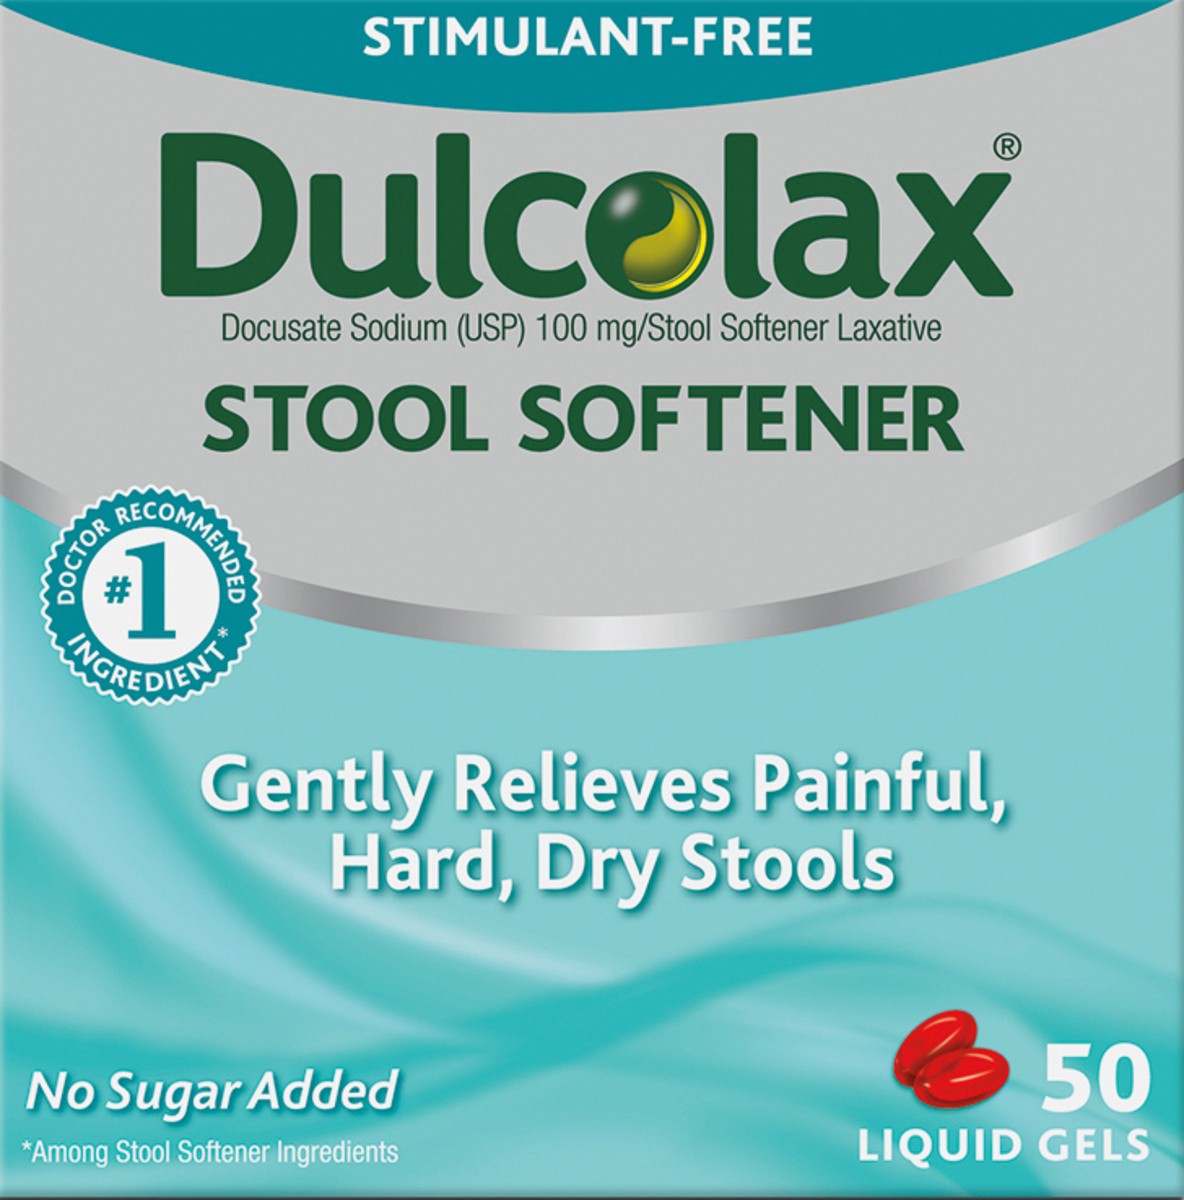 slide 6 of 7, DulcoEase Dulcolax Stool Softener Liquid Gels, 50 ct